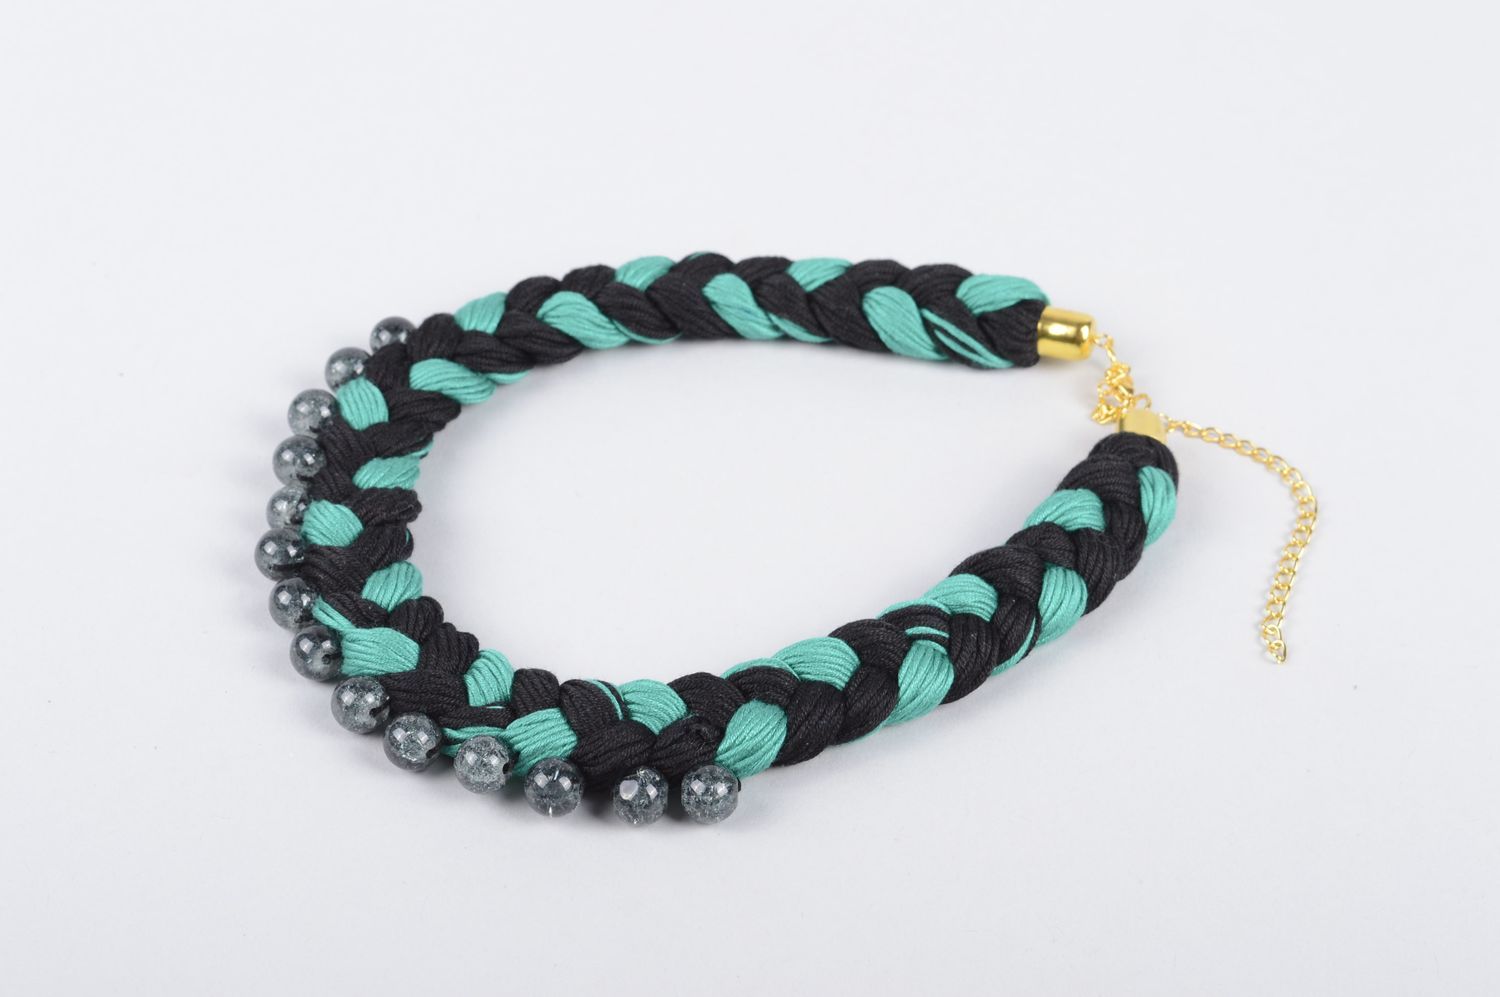 Handmade fabric necklace with beads necklace stylish jewelry designer accessory photo 2